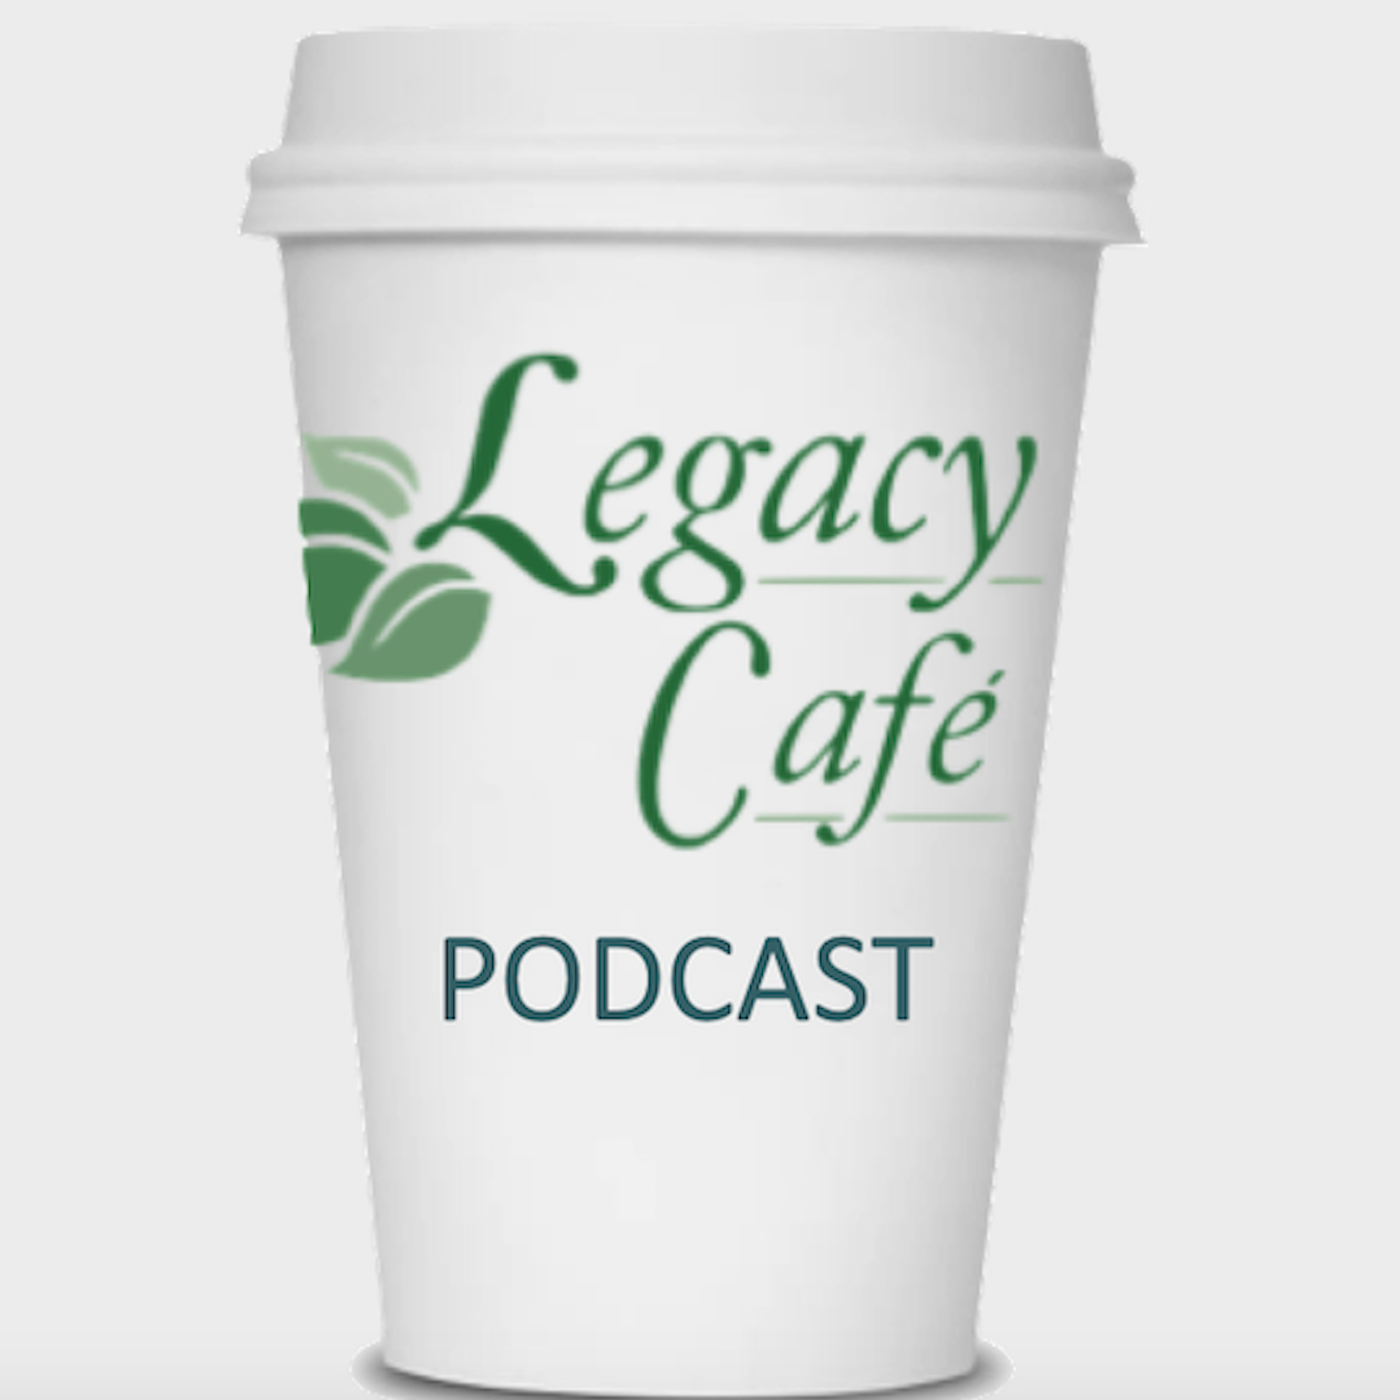 Legacy Cafe Podcast